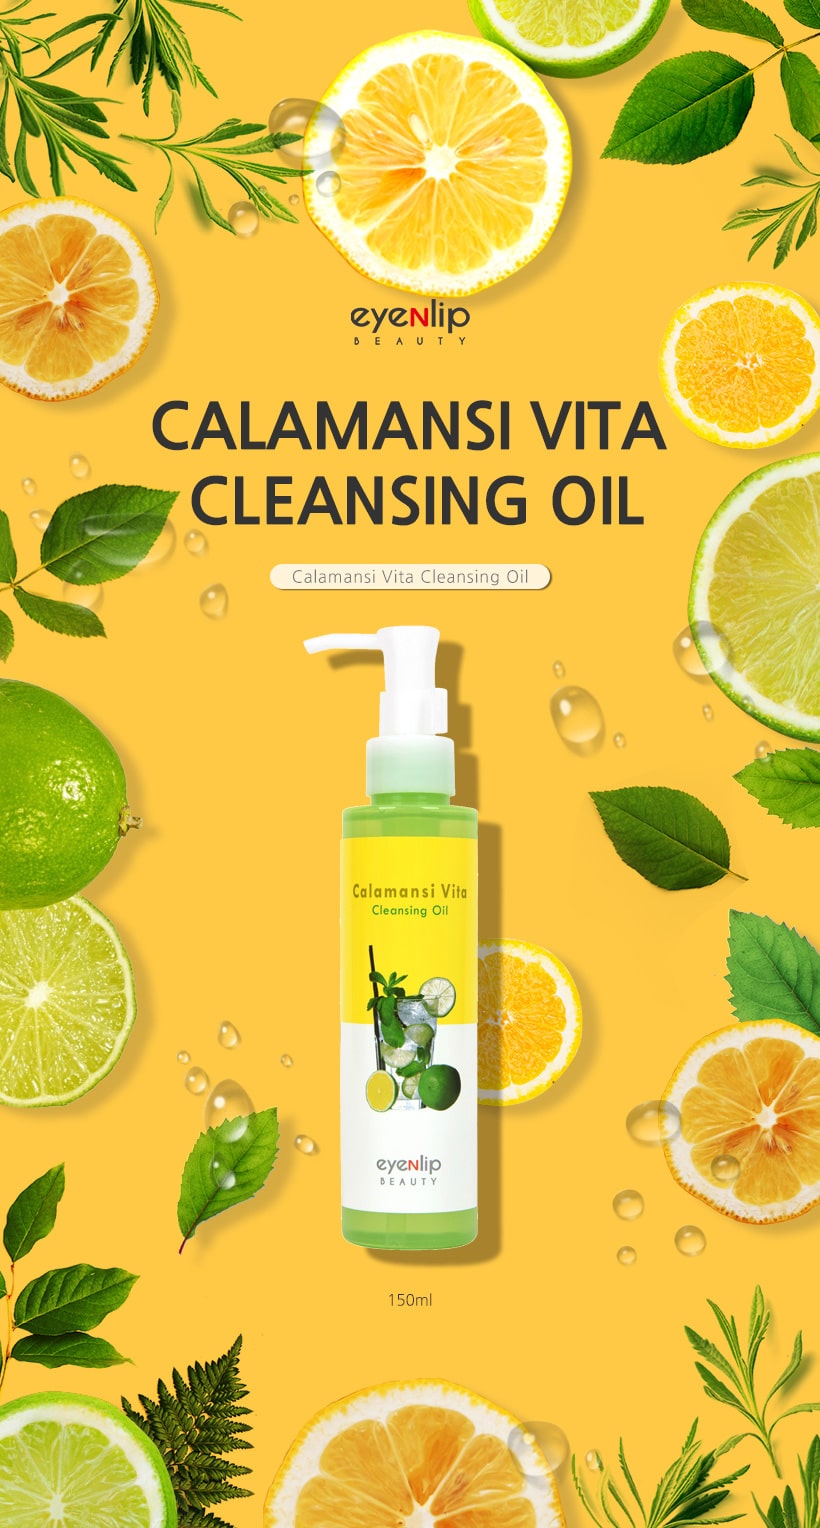 calamansi vita cleansing oil описание-min